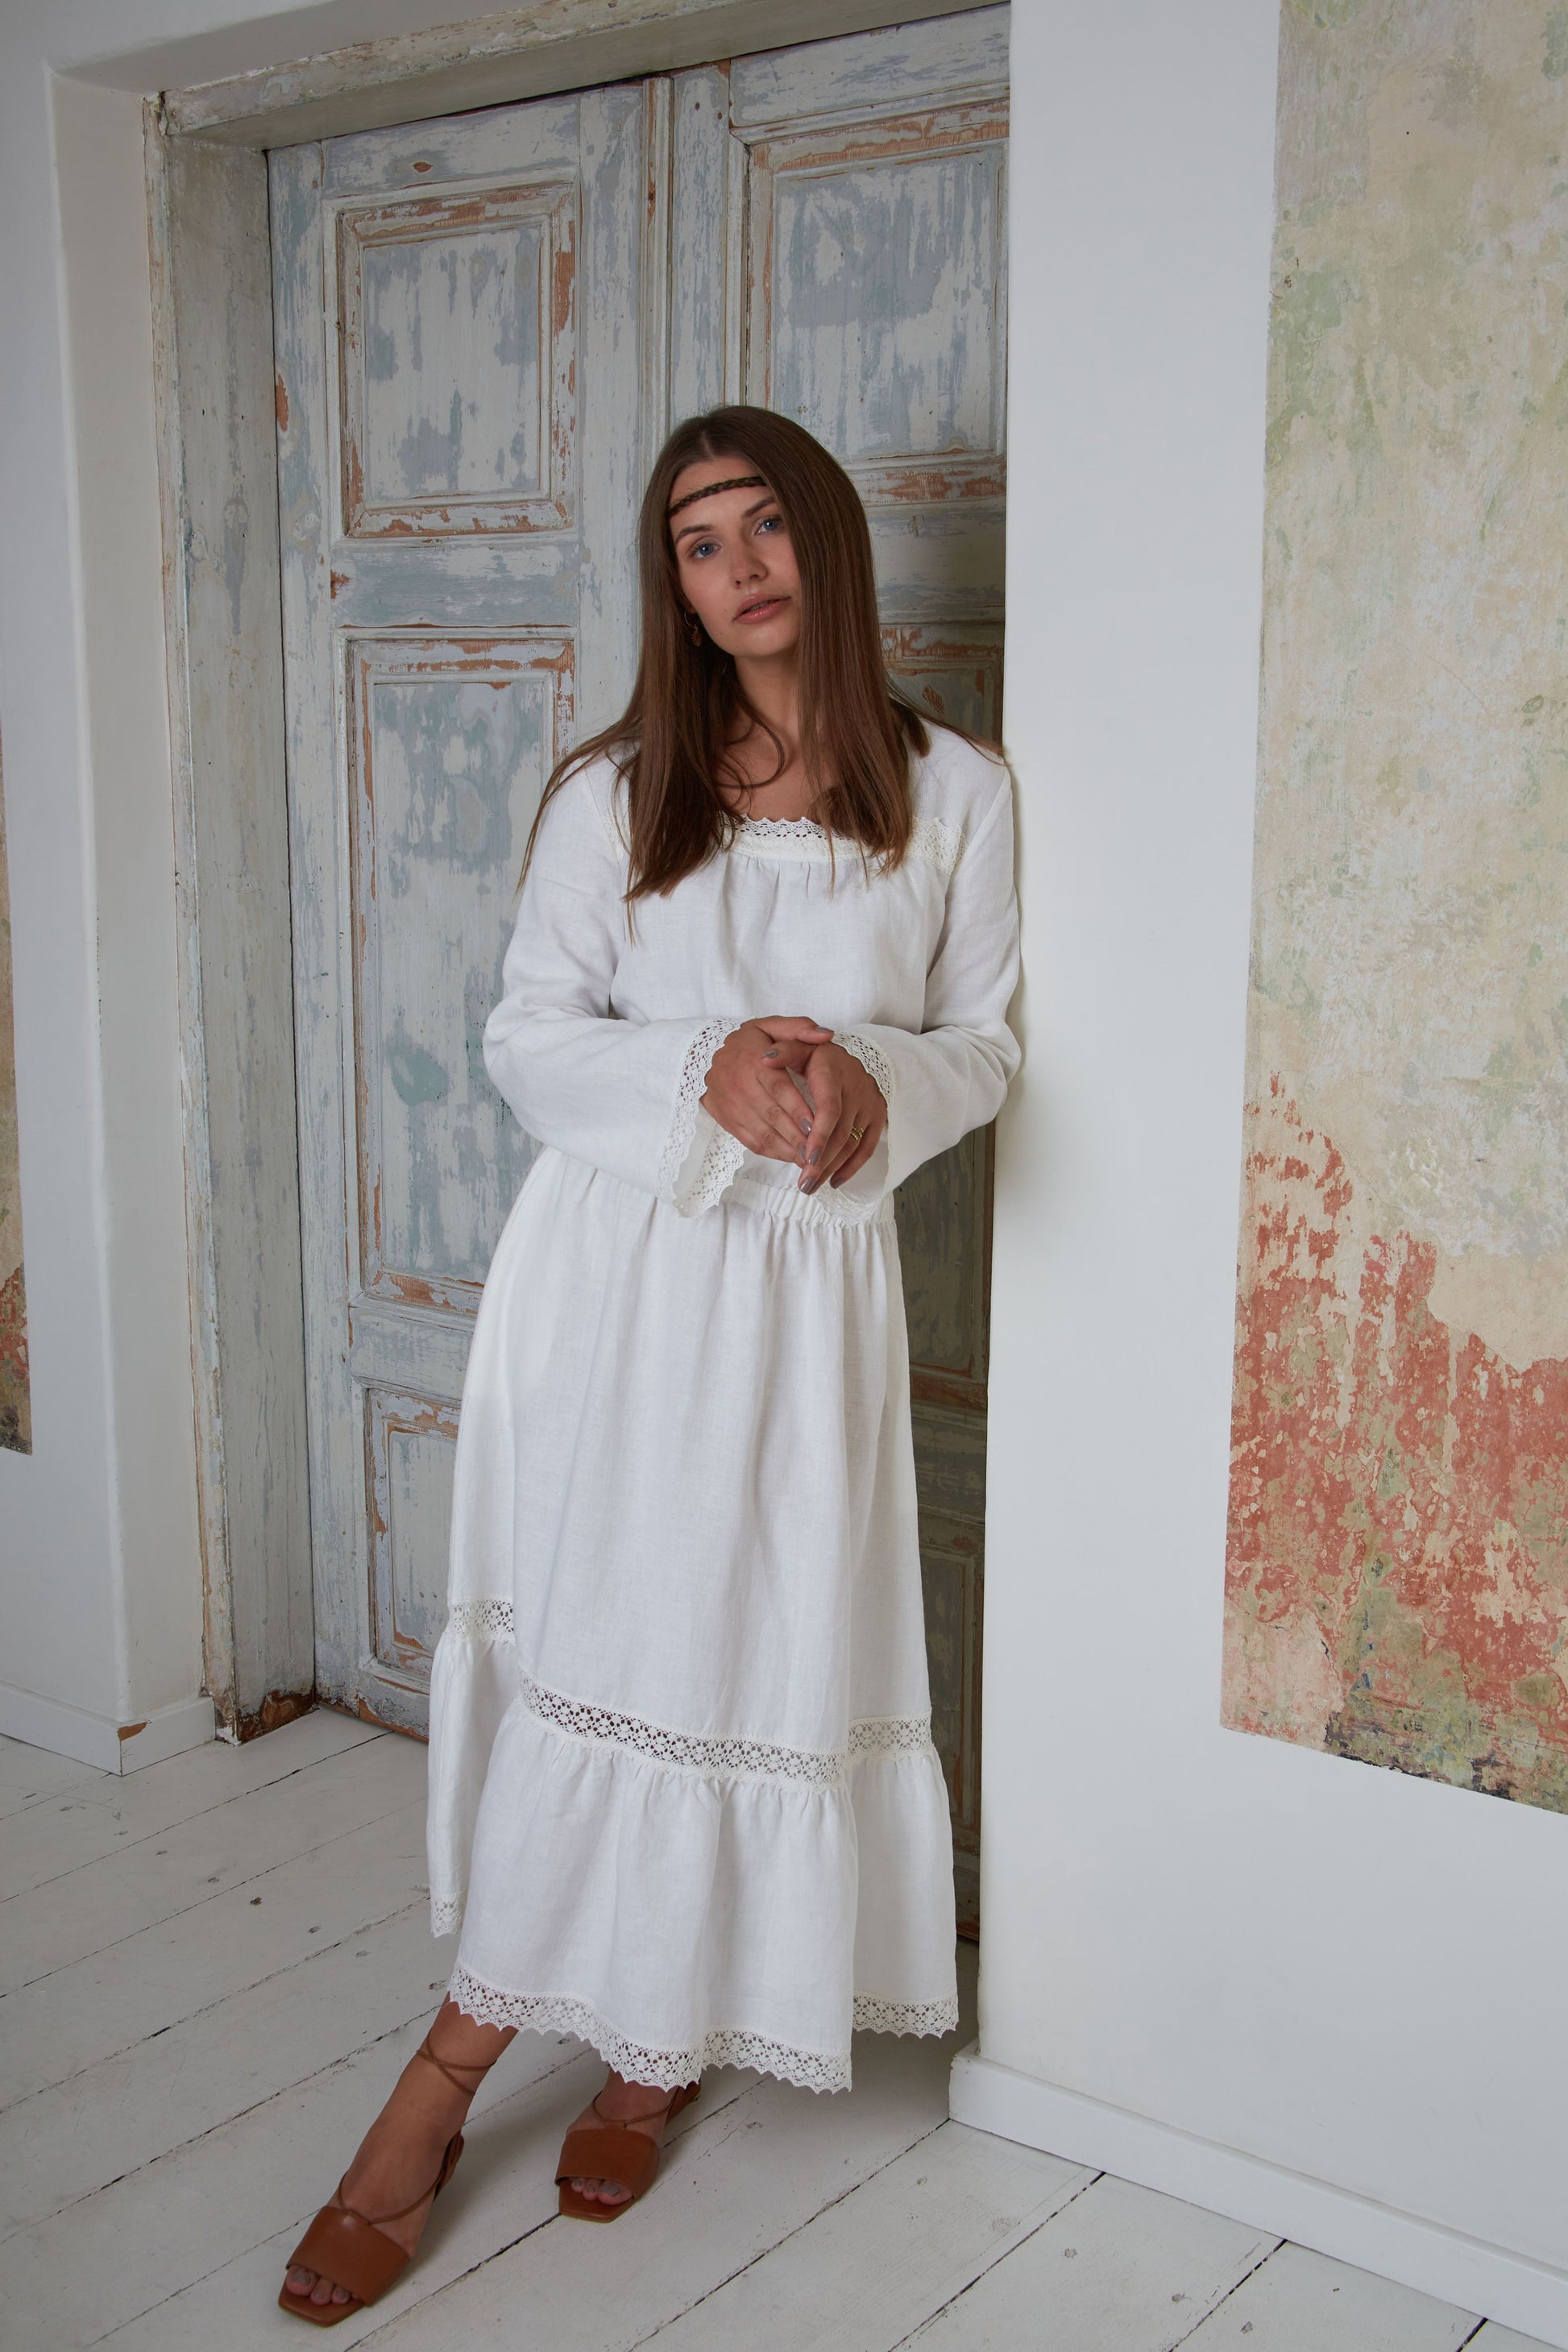 Linen Dress BOHO/ Hippie Dress Laced